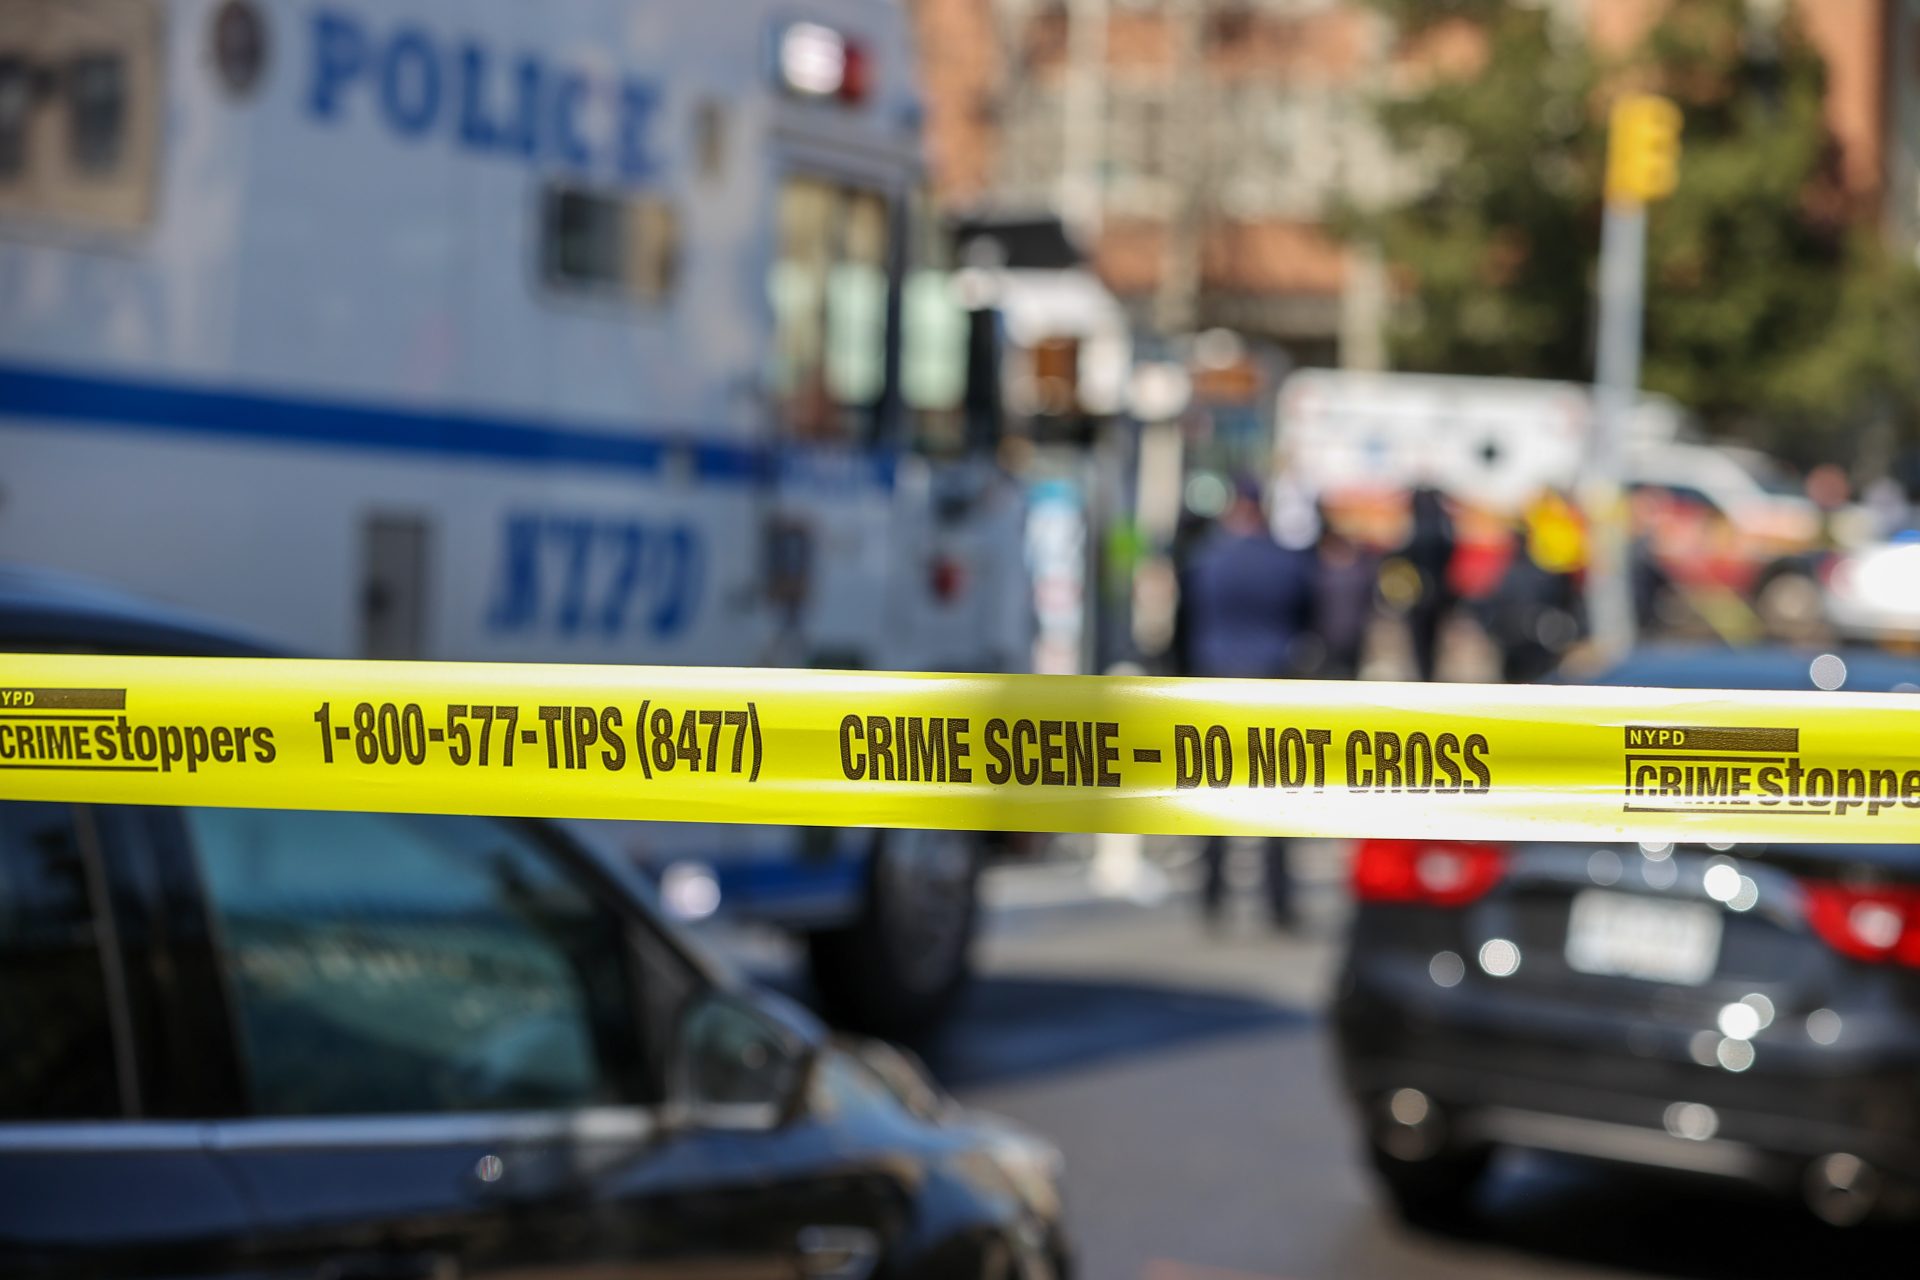 Bodega Worker Arrested After Shocking Fatal NYC Stabbing Over Bag of Chips Is Caught On Video